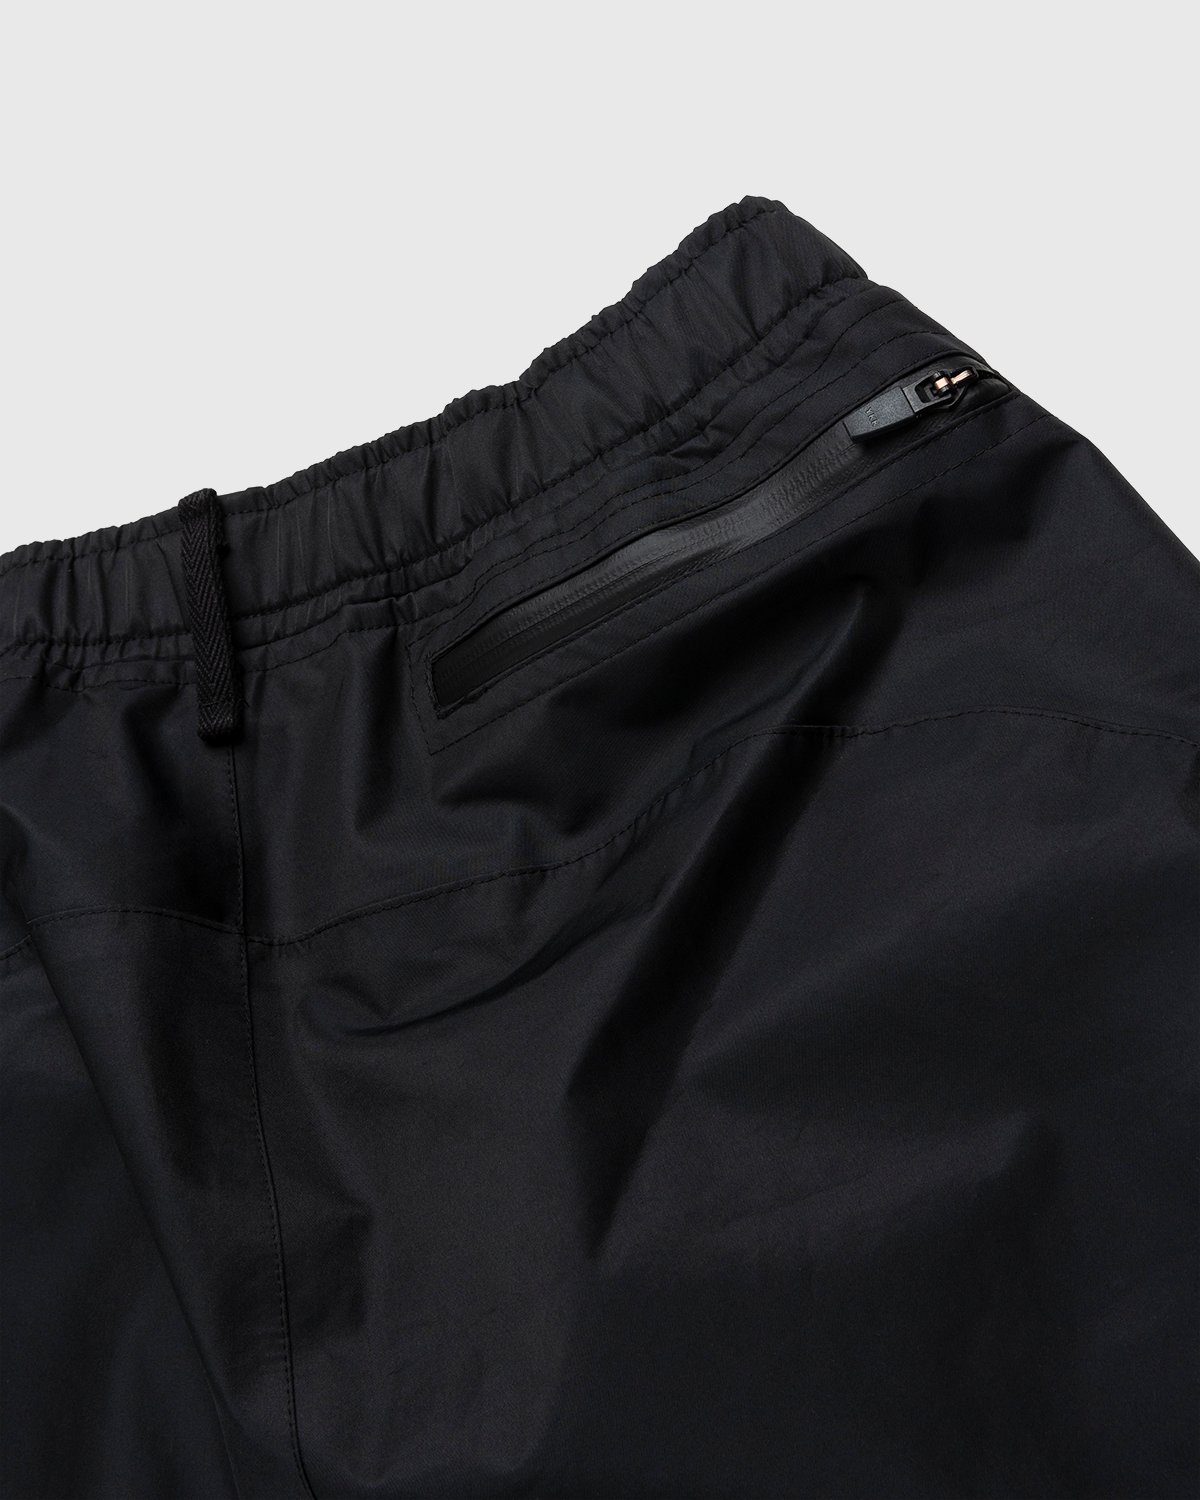 Entire Studios - CMC Trousers Slate Black - Clothing - Black - Image 3